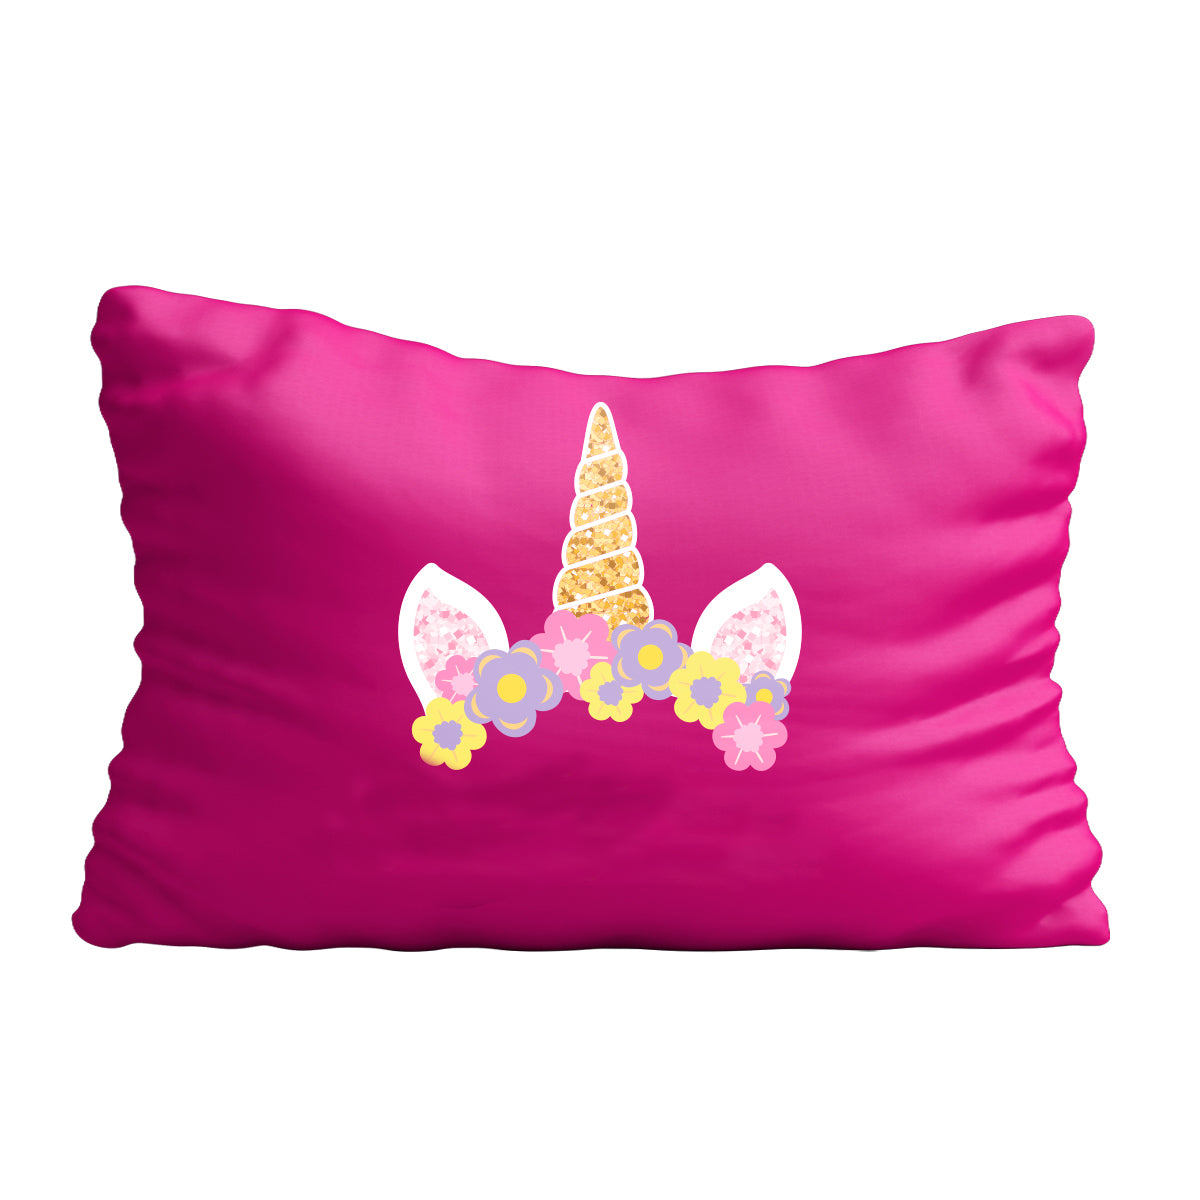 Unicorn name hot pink pillow case - Wimziy&Co.